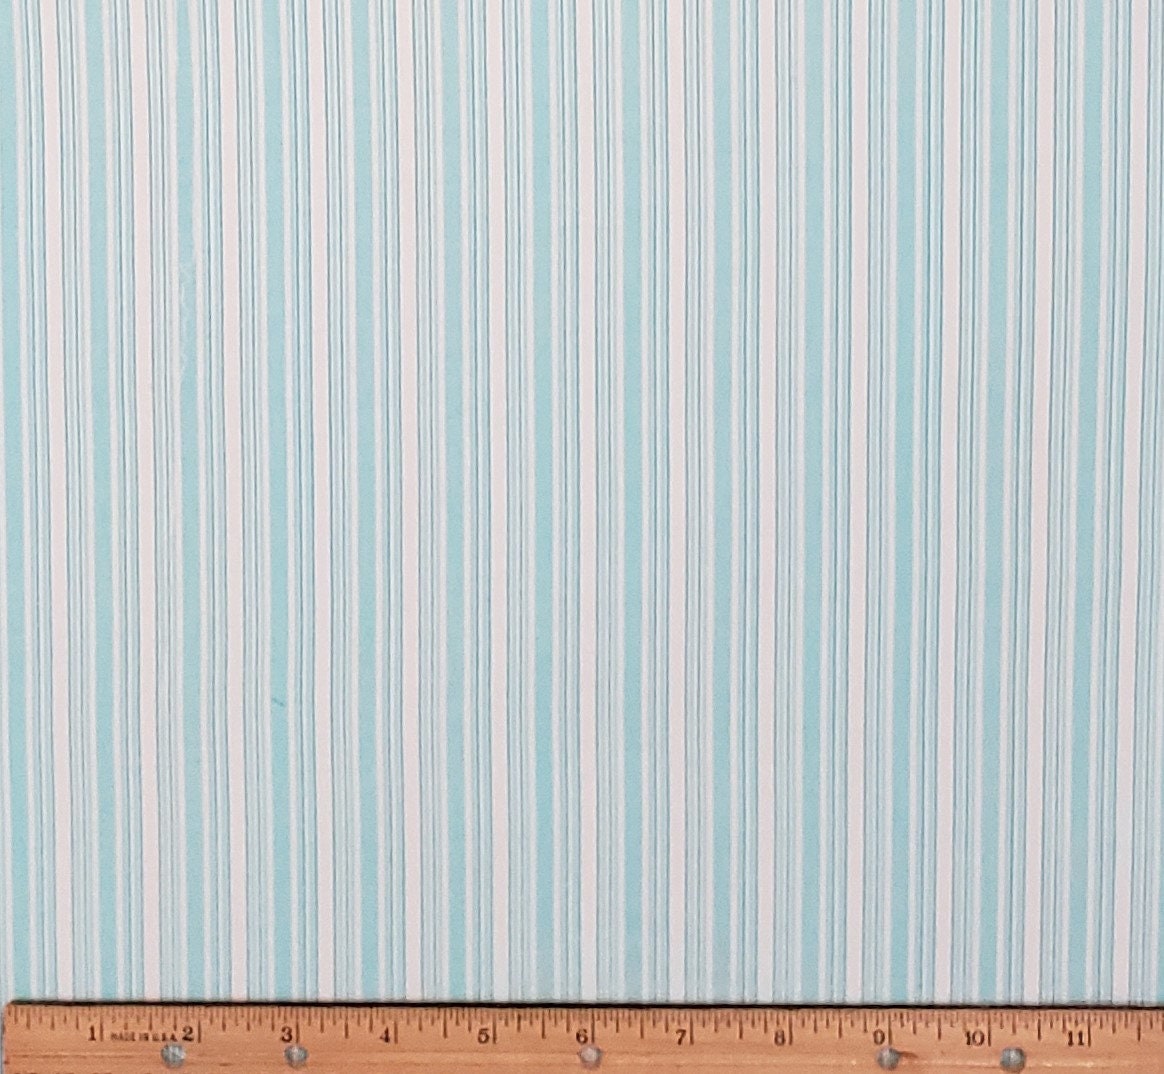 EOB - MBT, Inc. - Light Blue Striped Fabric